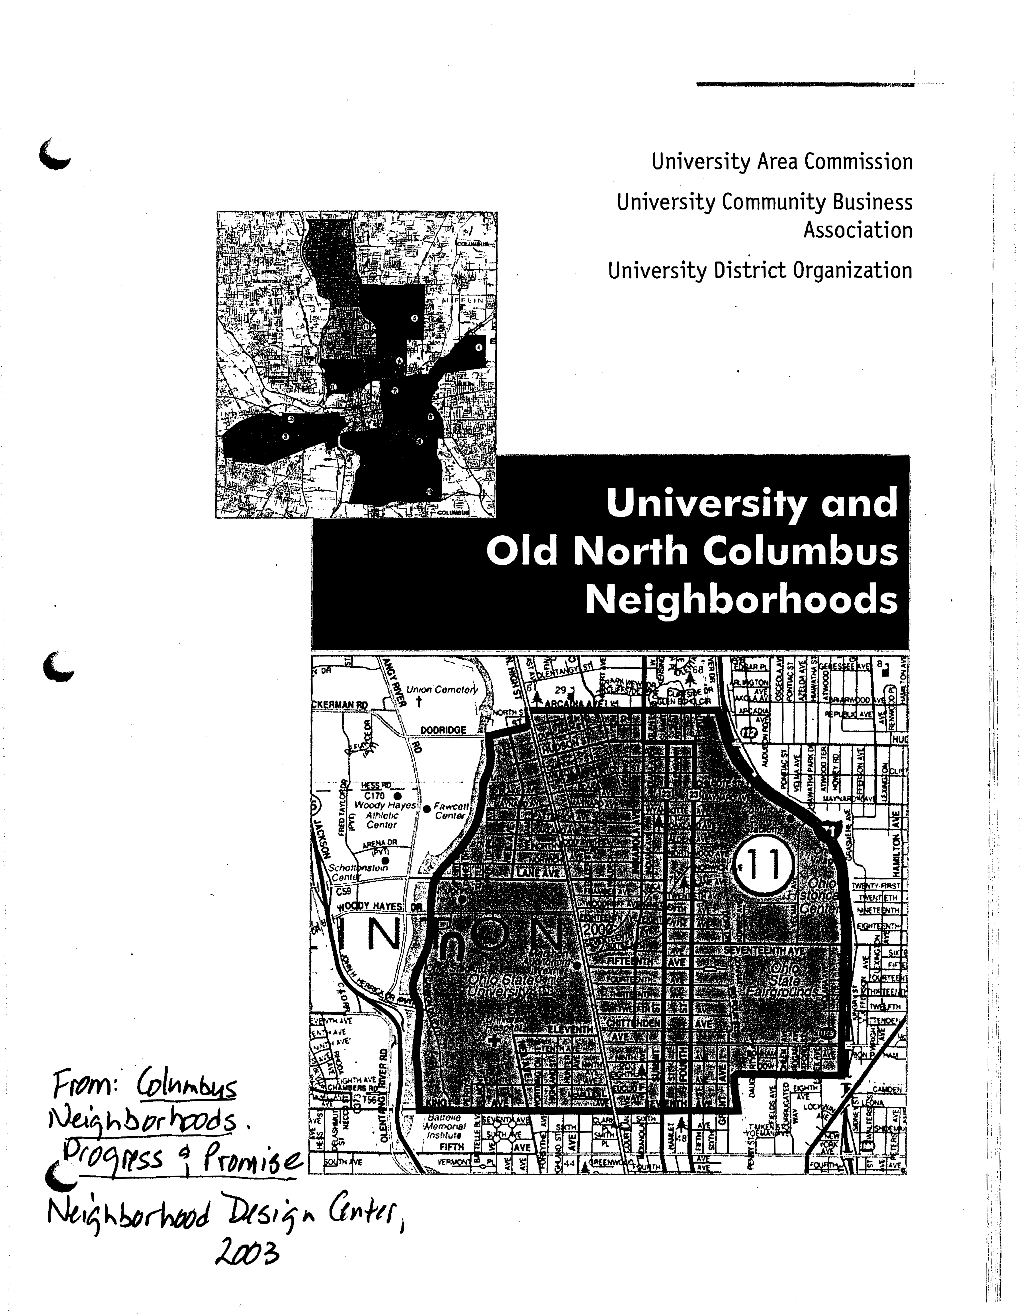 University and Old North Columbus Neighborhoods